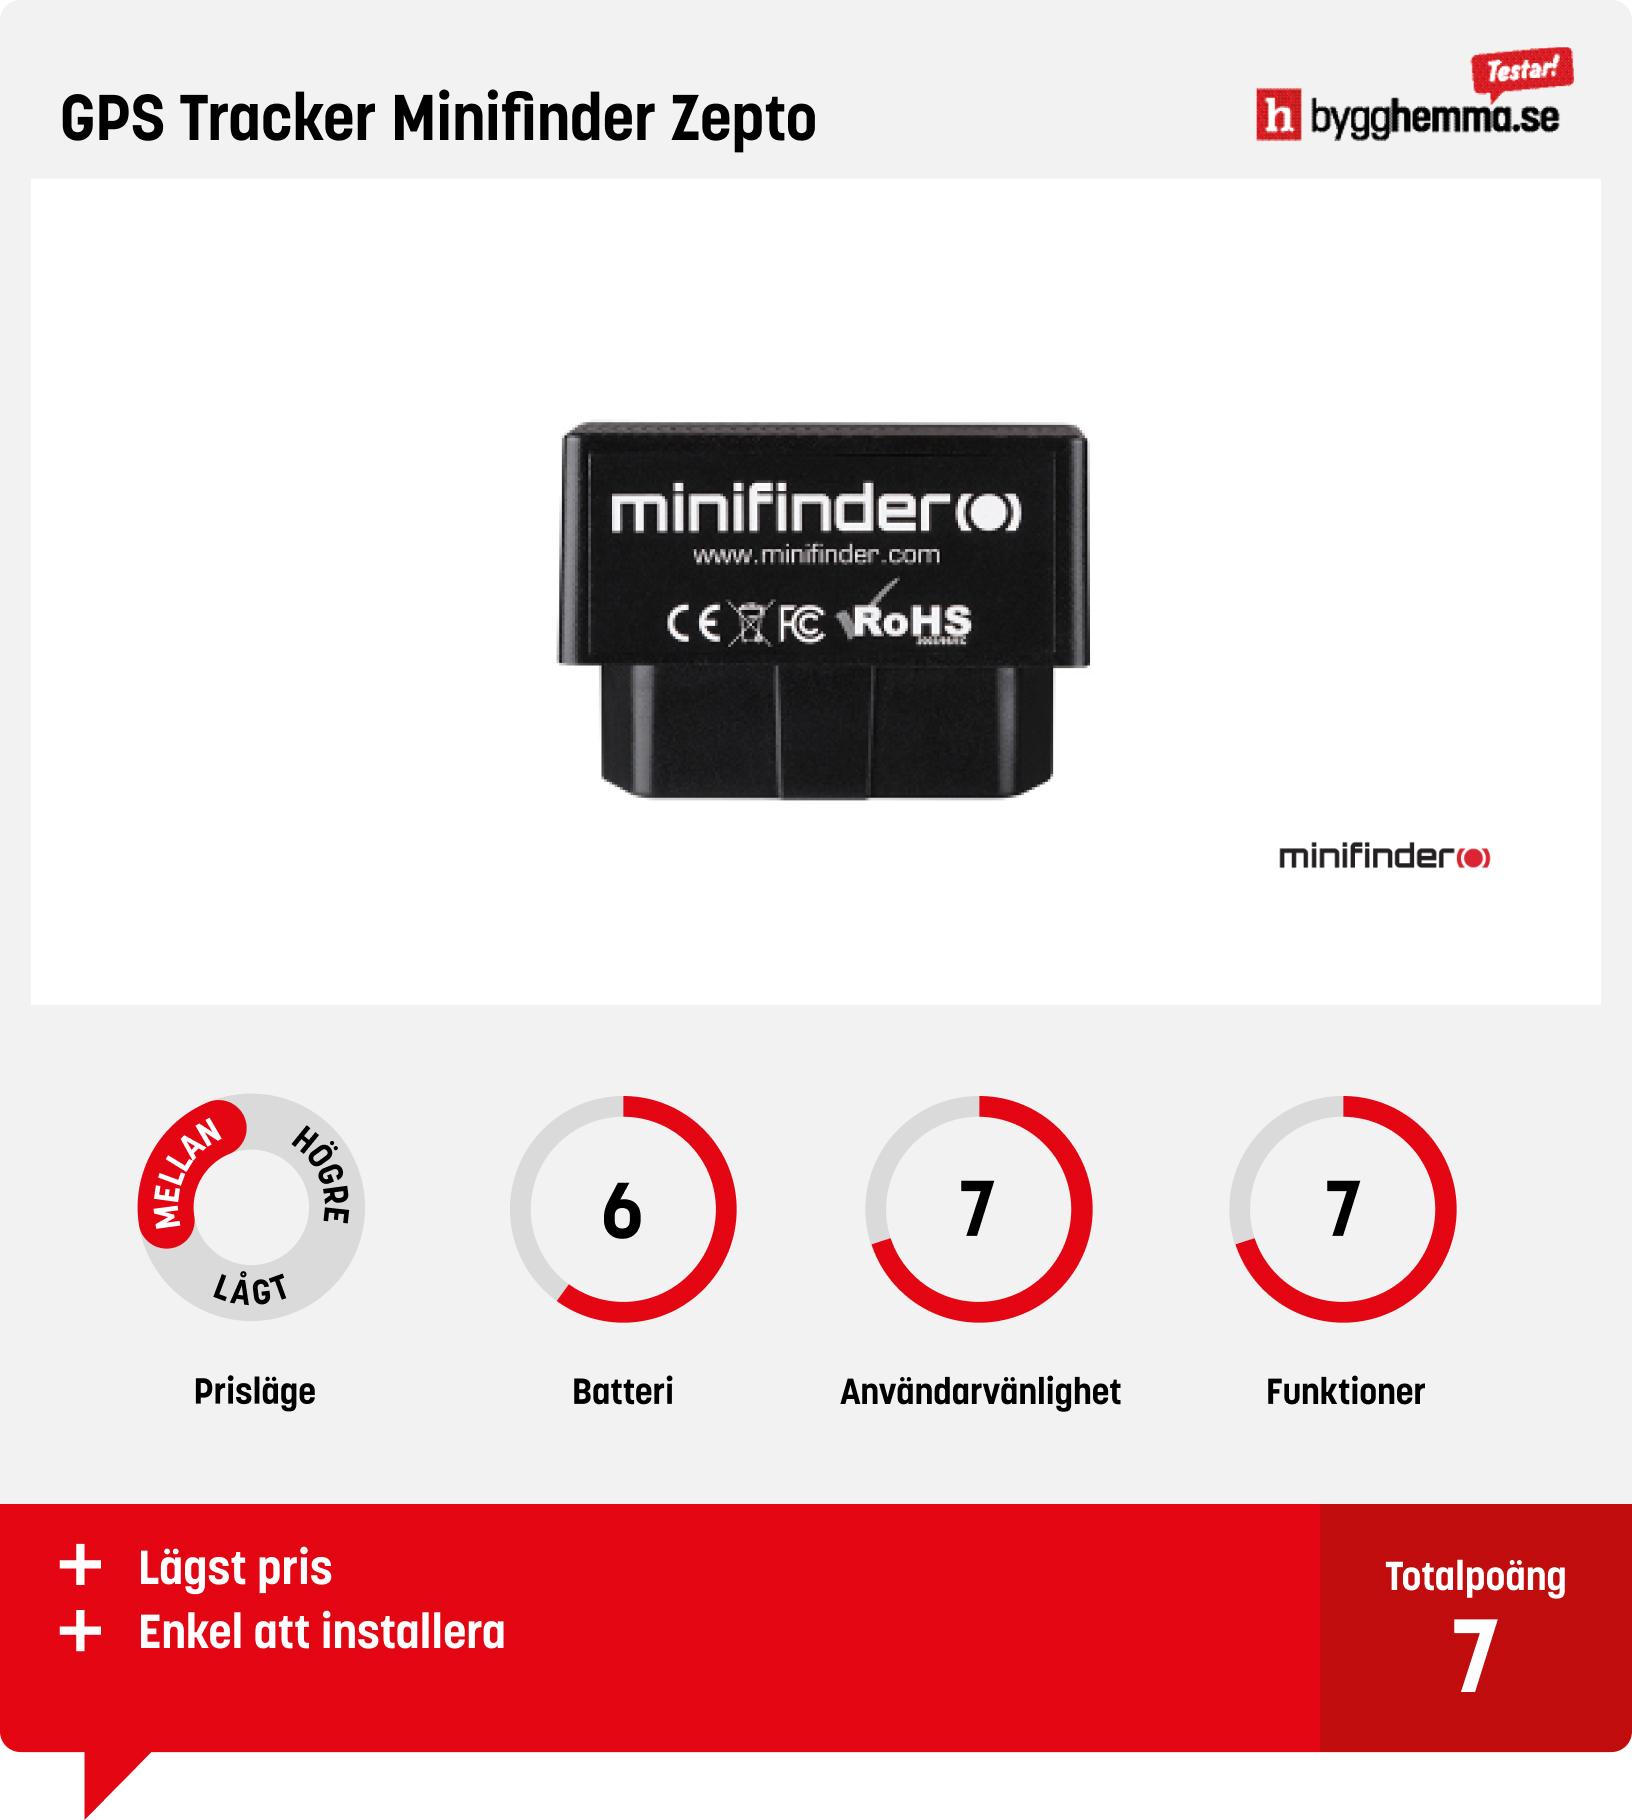 GPS tracker test - GPS Tracker Minifinder Zepto